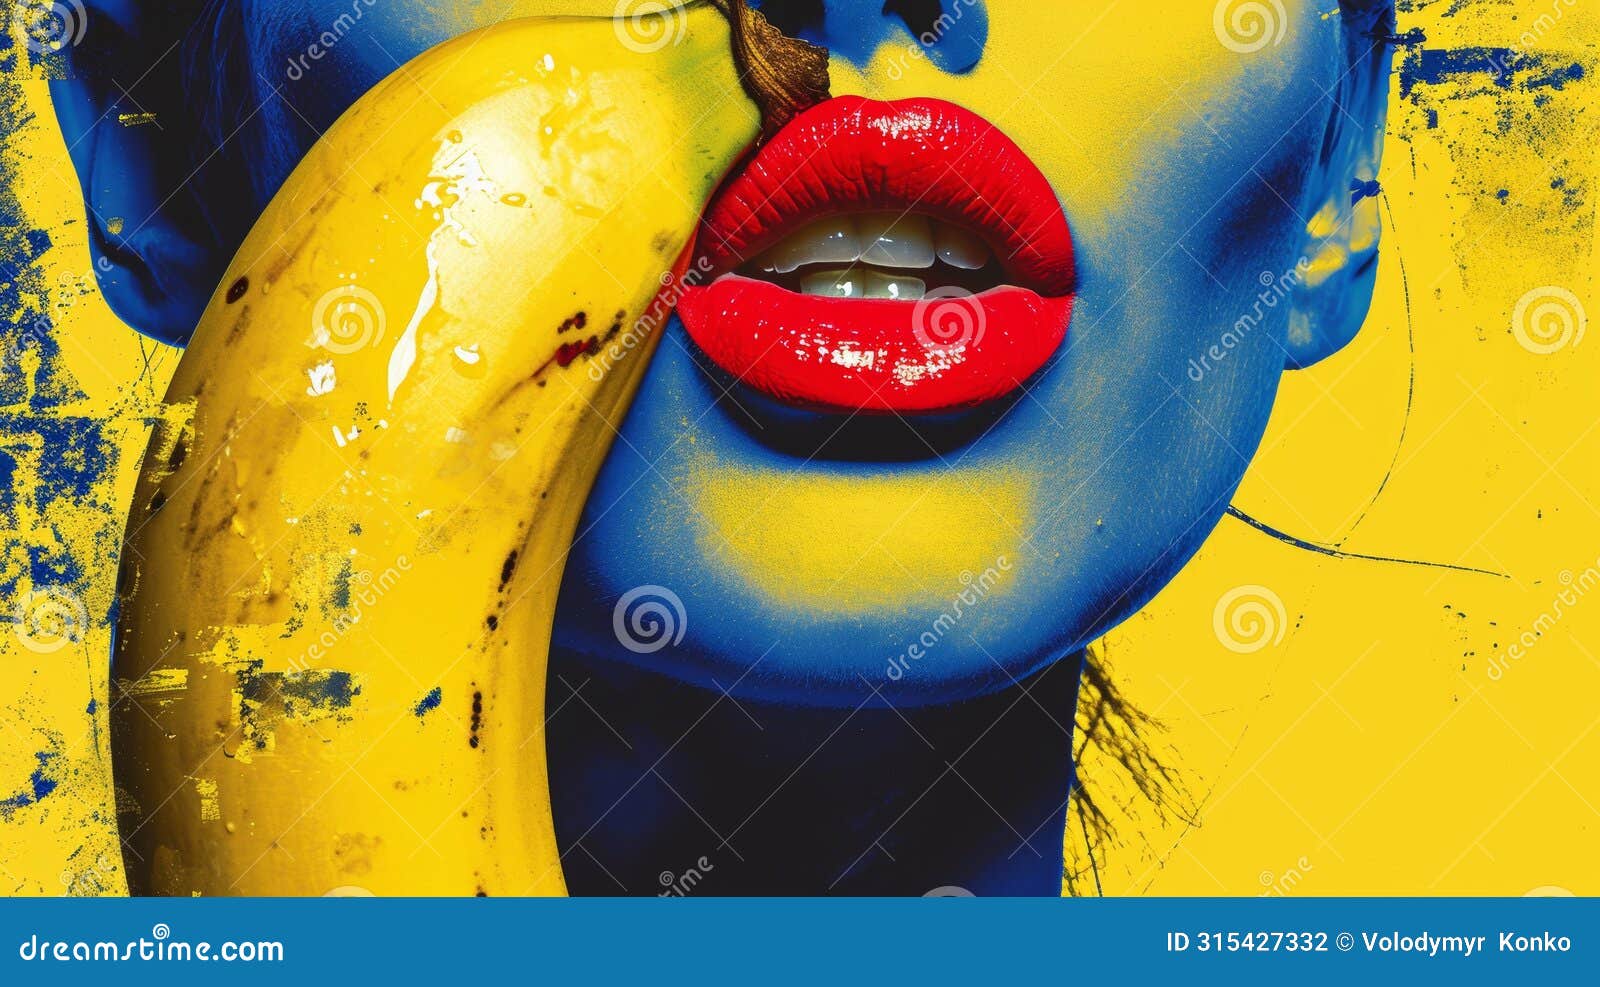 pop art seduction - bold lips and banana on vivid blue